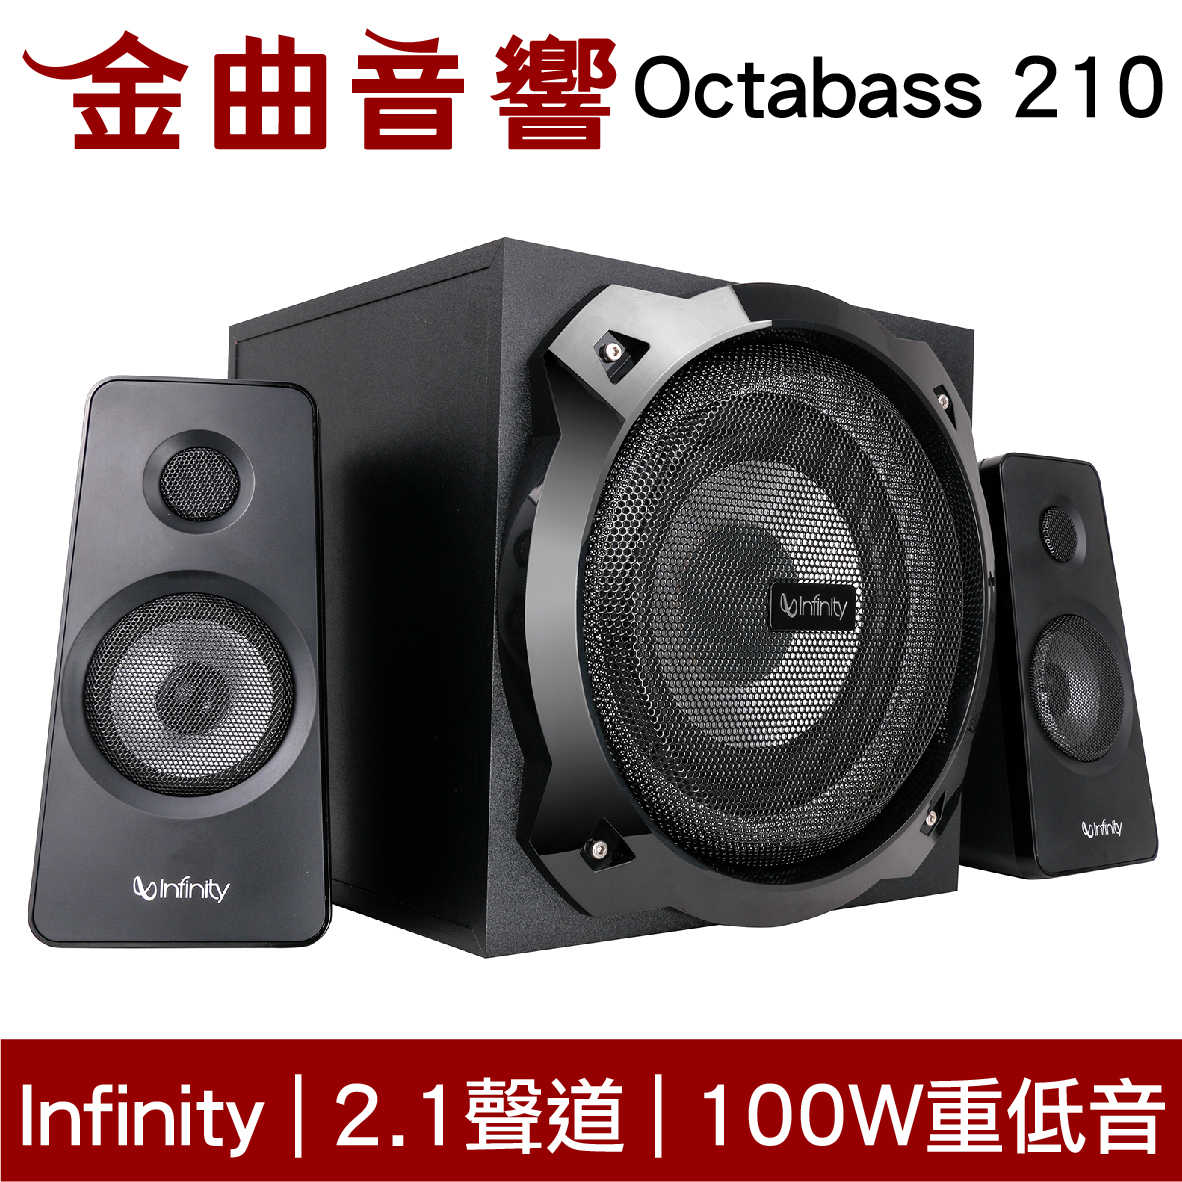 Infinity Octabass 210 重低音 2.1聲道 多媒體 USB 藍牙喇叭 | 金曲音響